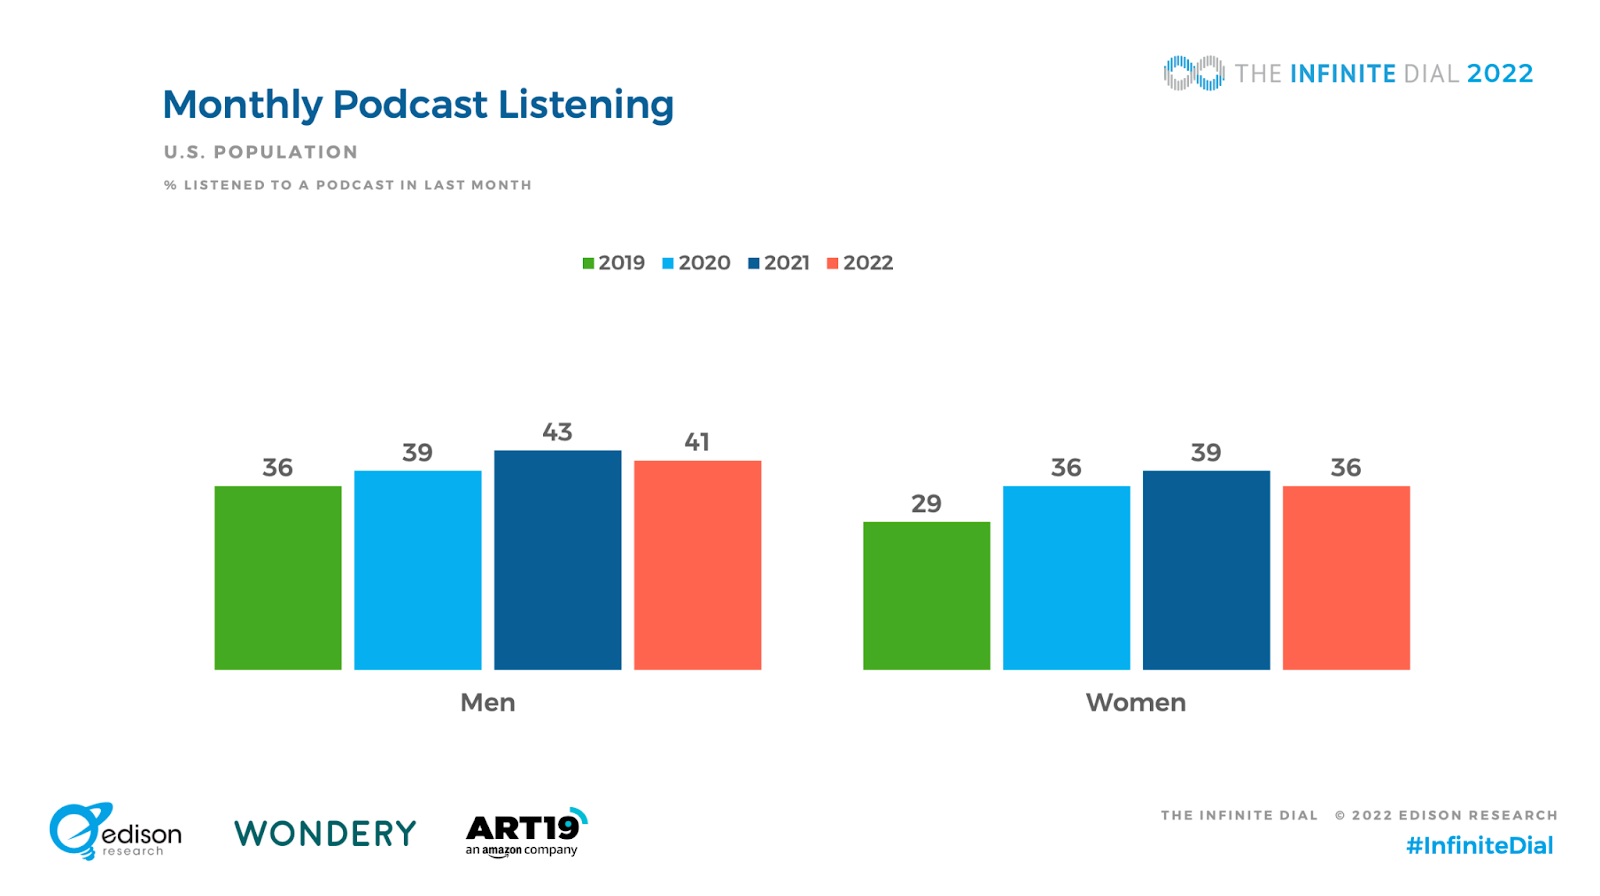 Edison podcast statistics on Monthly podcast listening